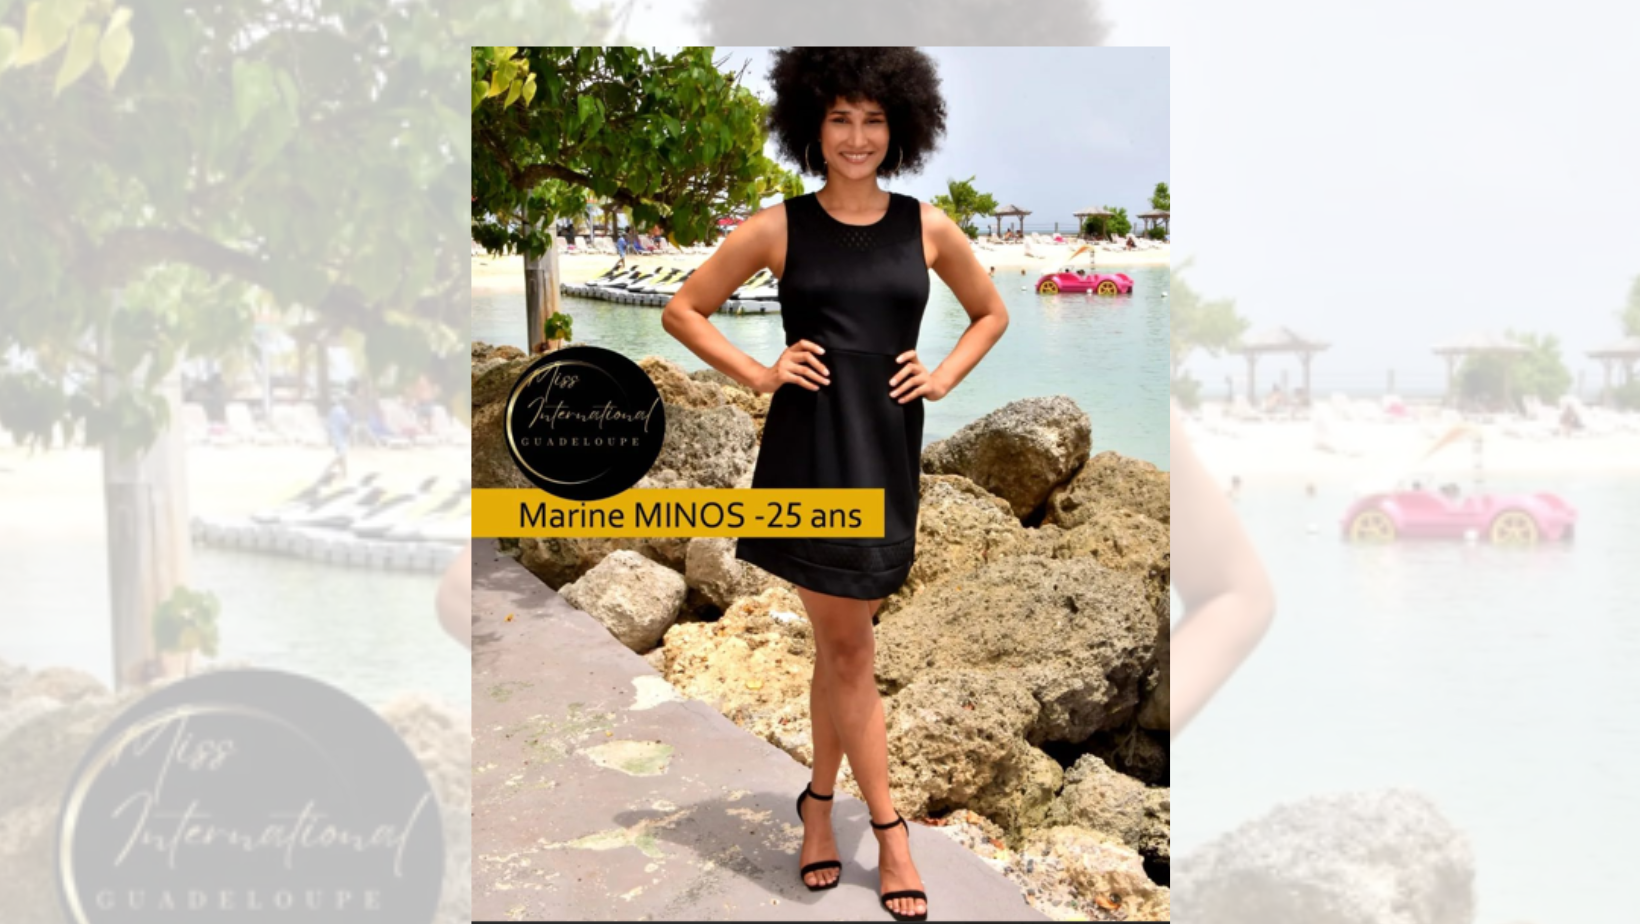     Marine Minos est Miss Wolrd Guadeloupe 2023

